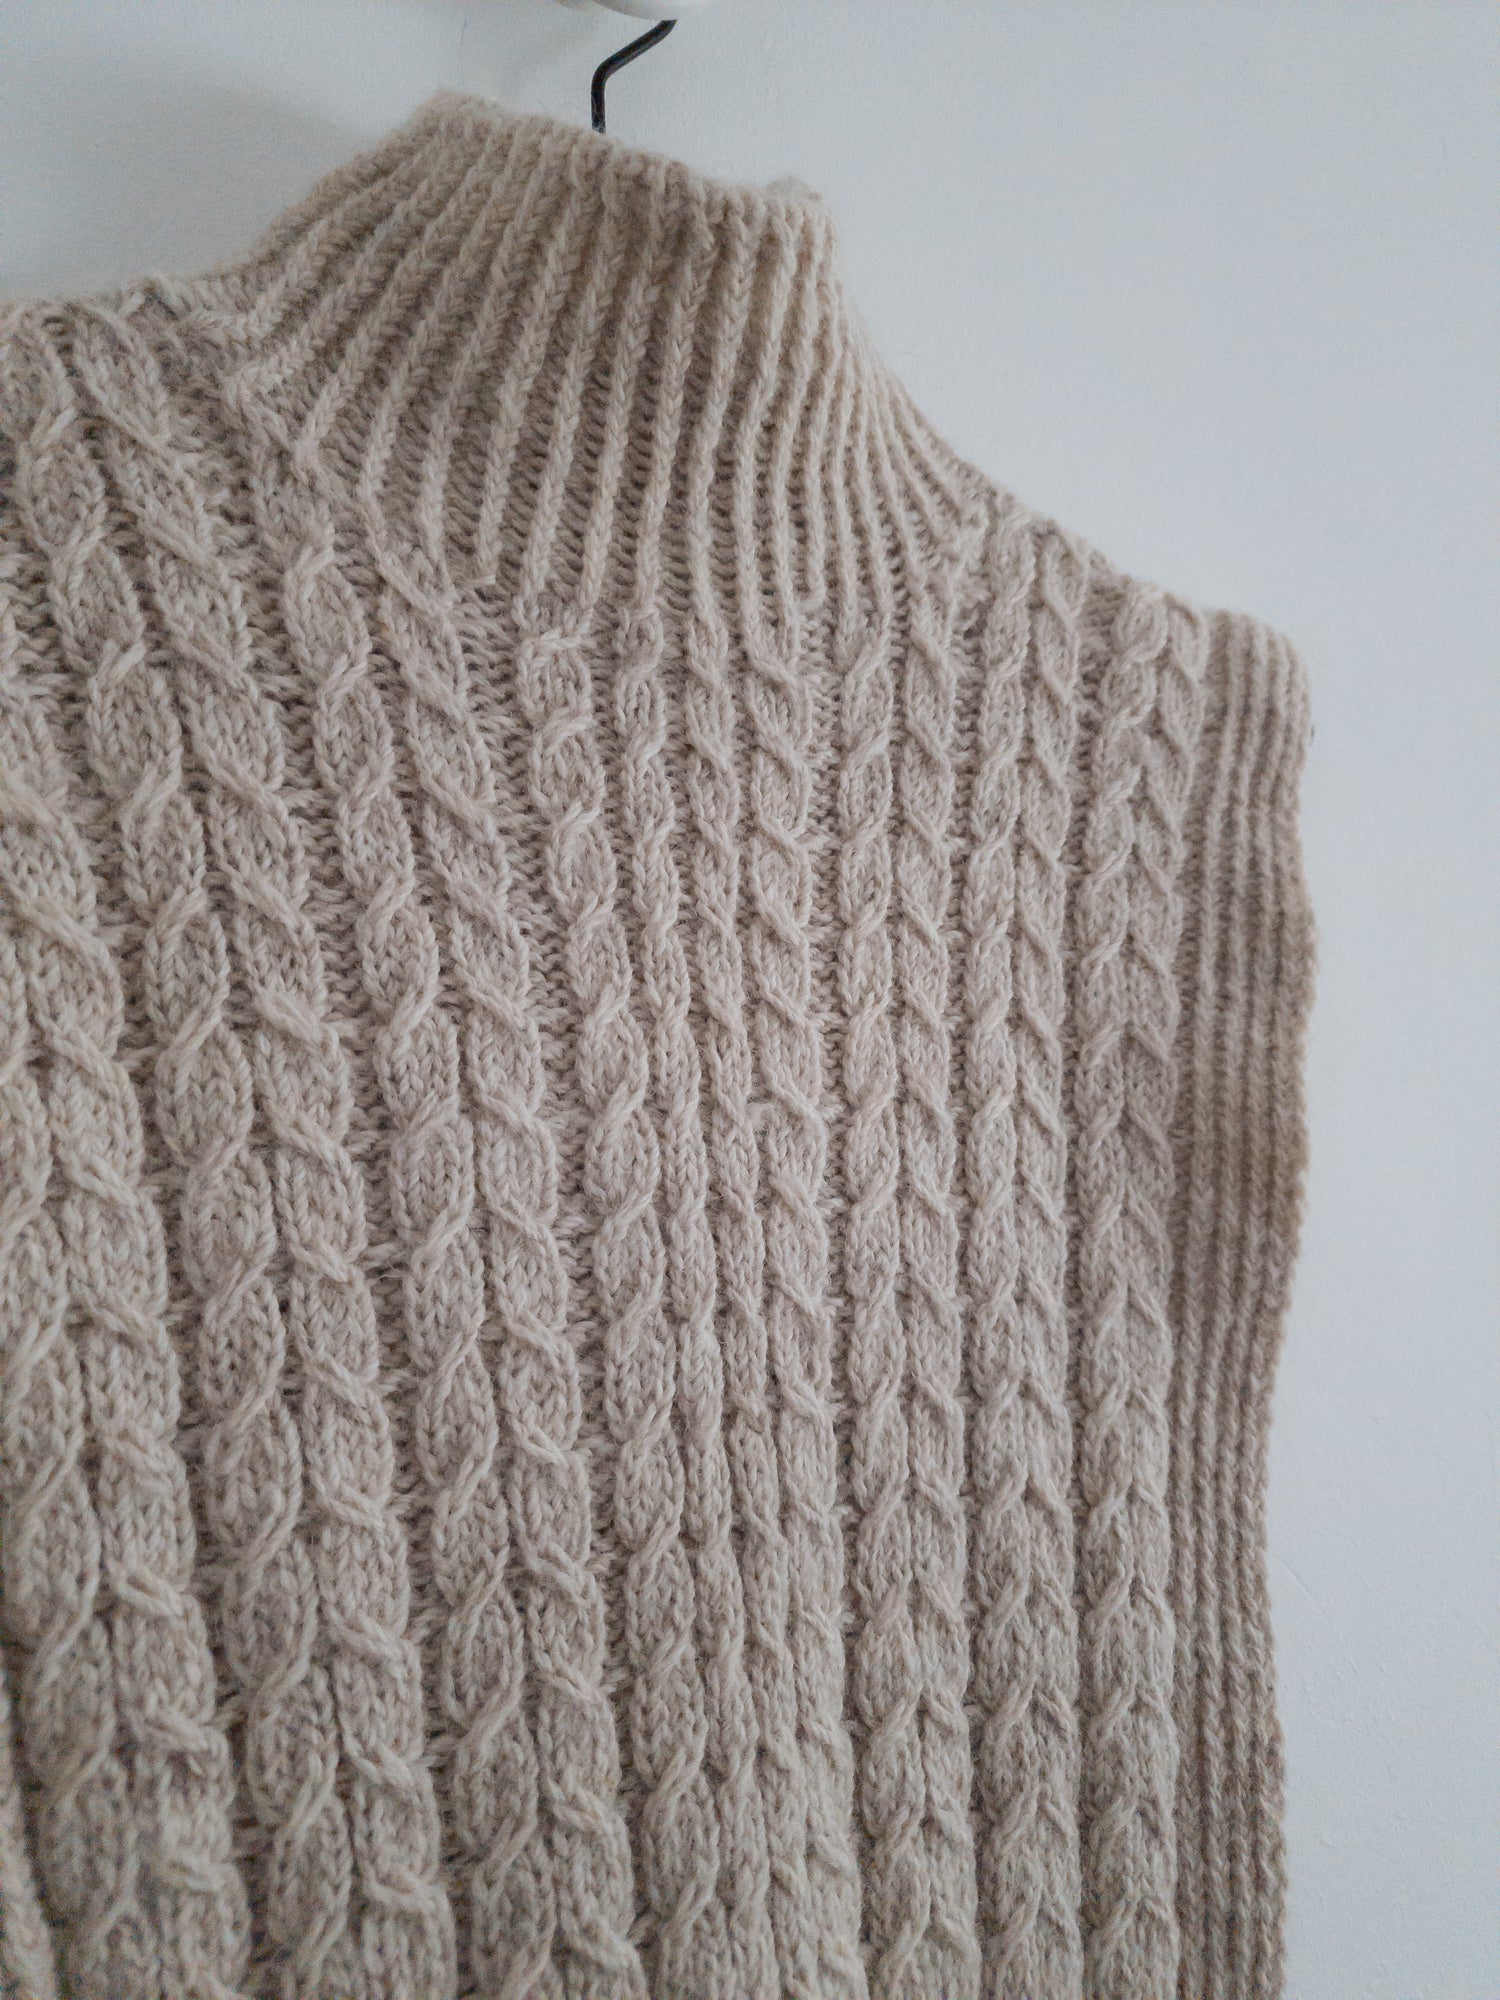 Imagine Spring Cowl - Knitting Pattern – Woodlandsknits